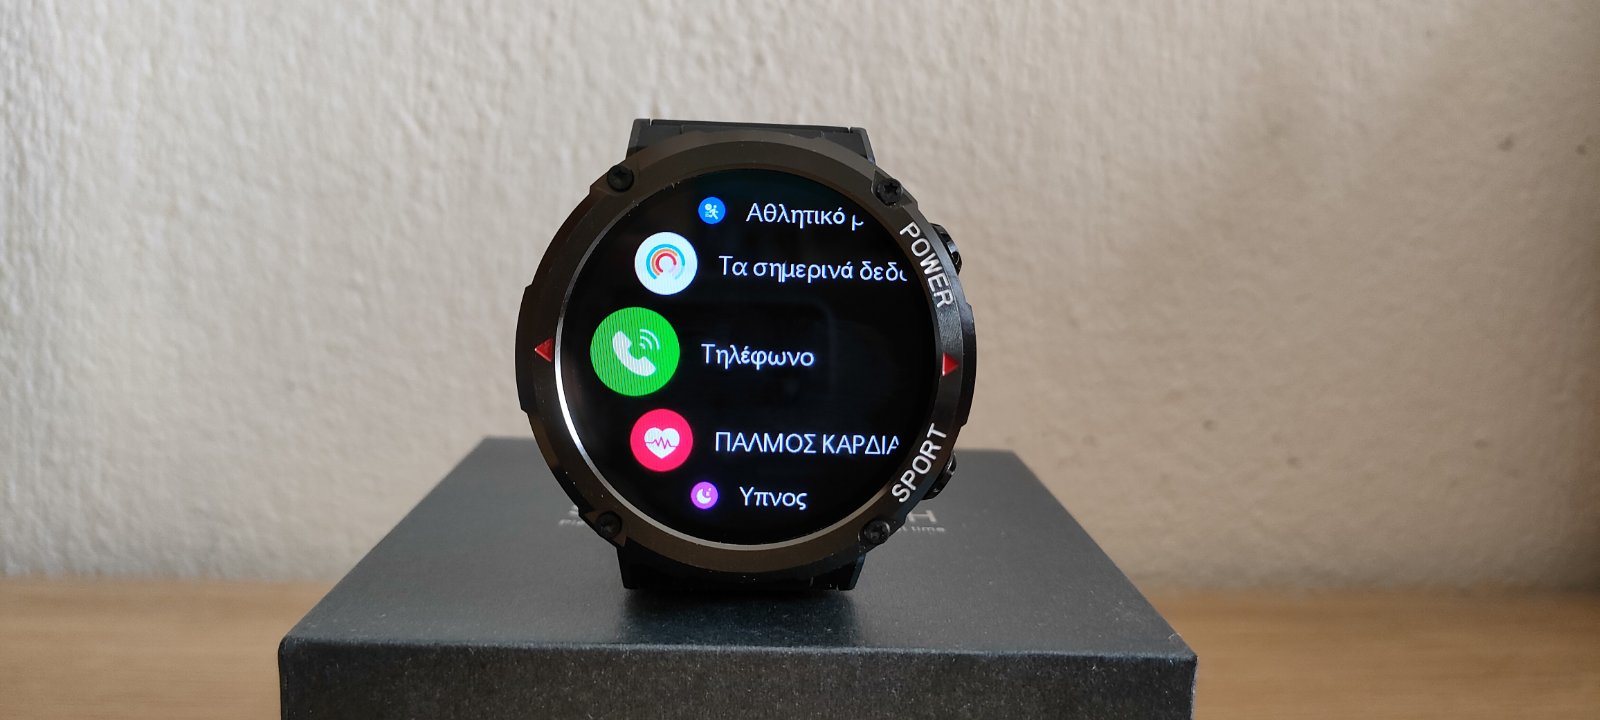 Smartwatch καινούργιο με οθόνη 1,6 ίντσες, ΒΤ Call, Ελληνικό μενού(βίντεο στην περιγραφή)